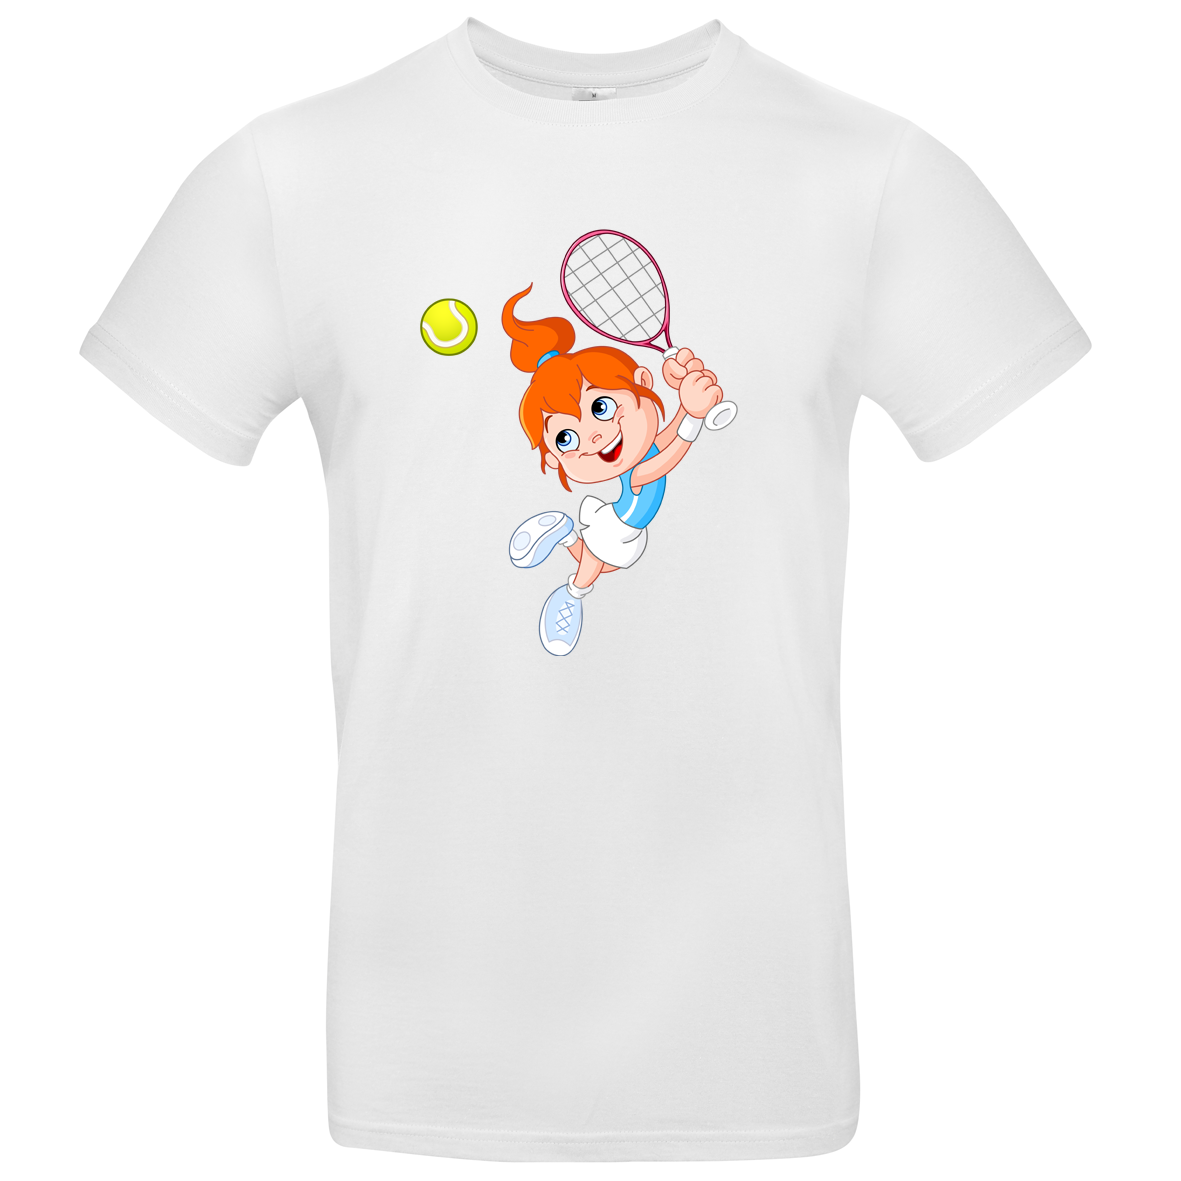 Kinder T Shirt mit Tennis Girl 104 - 158